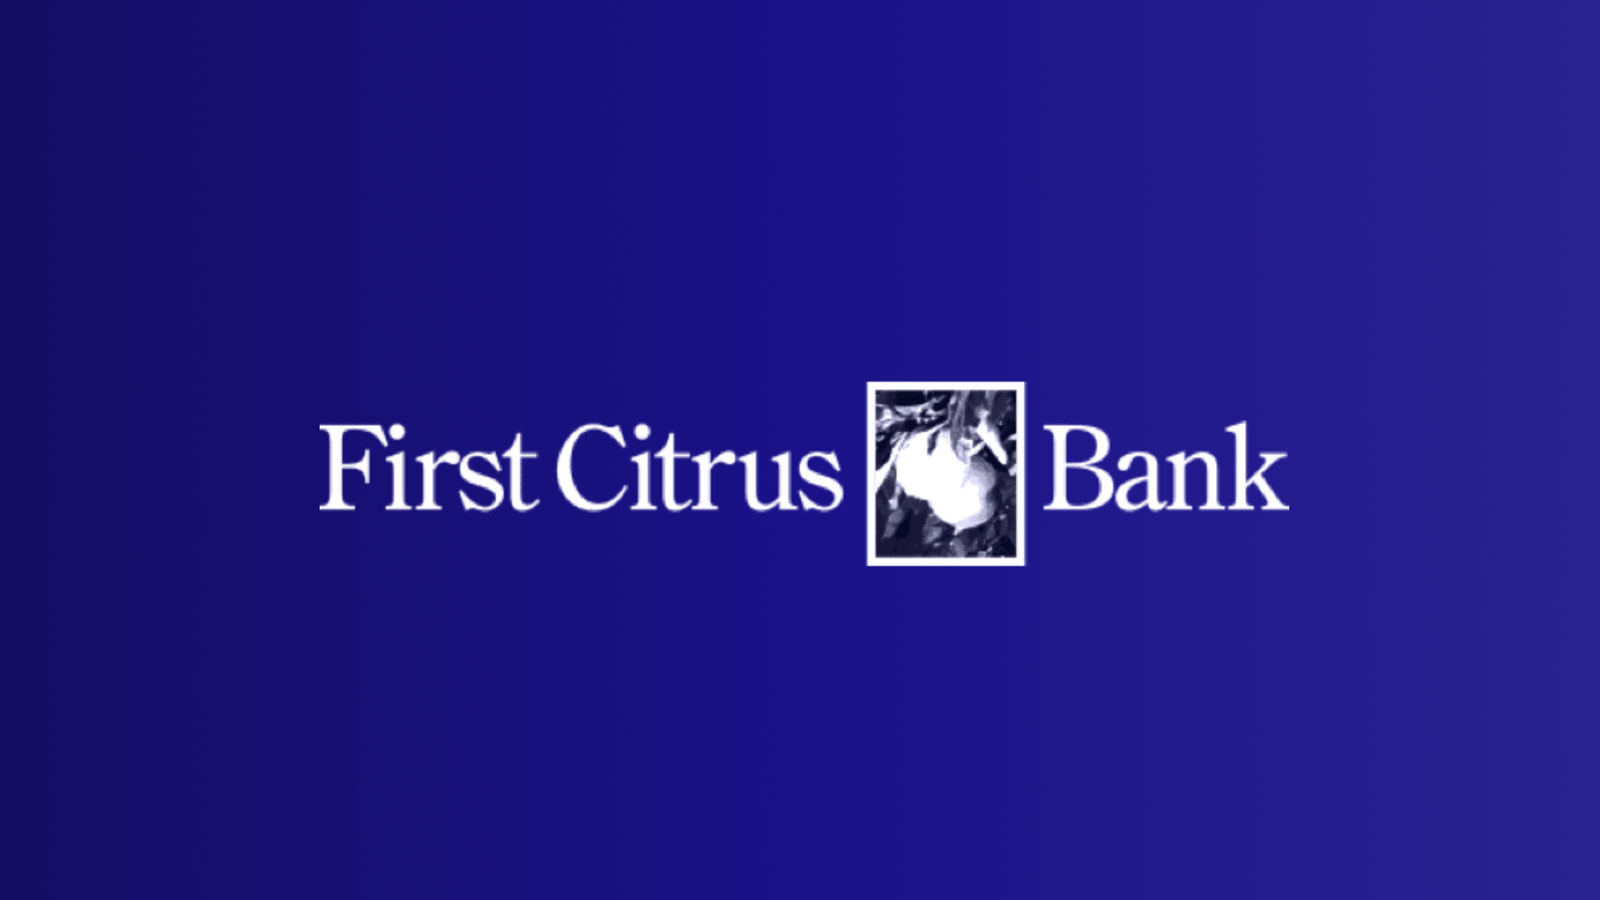 First Citrus Bank logo